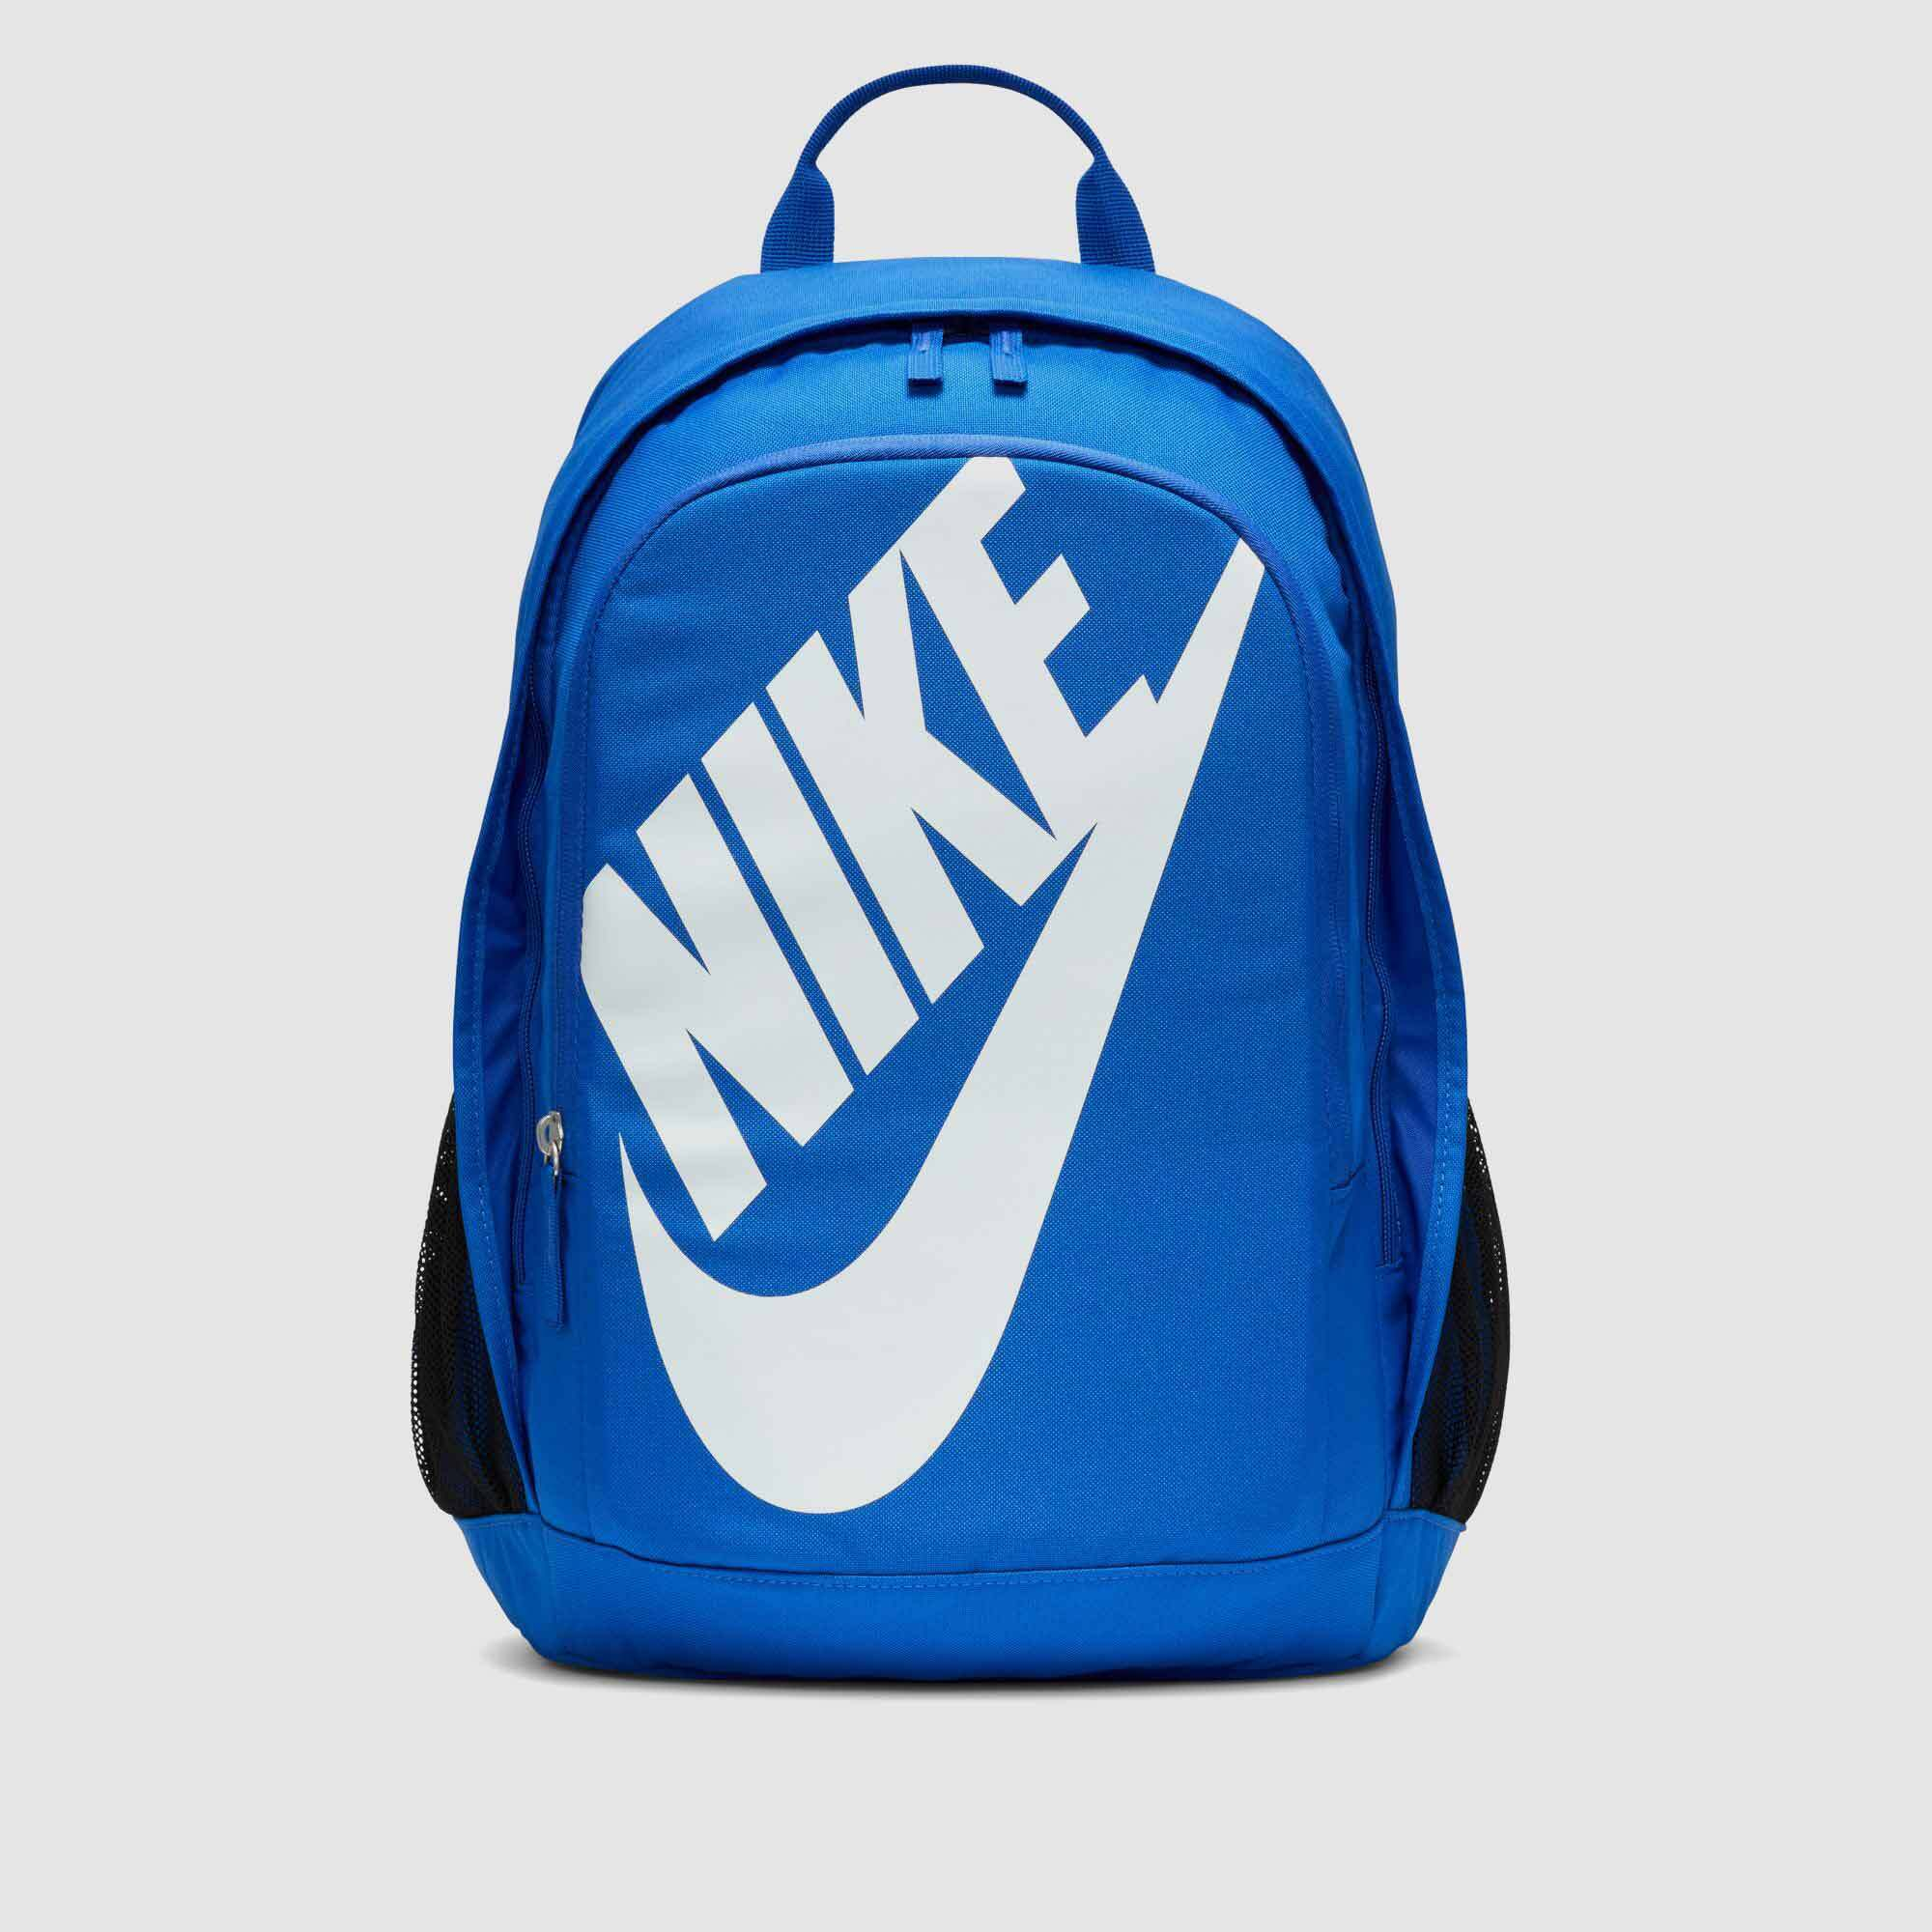 Nike Hayward Backpack Royal Blue 25 Litres